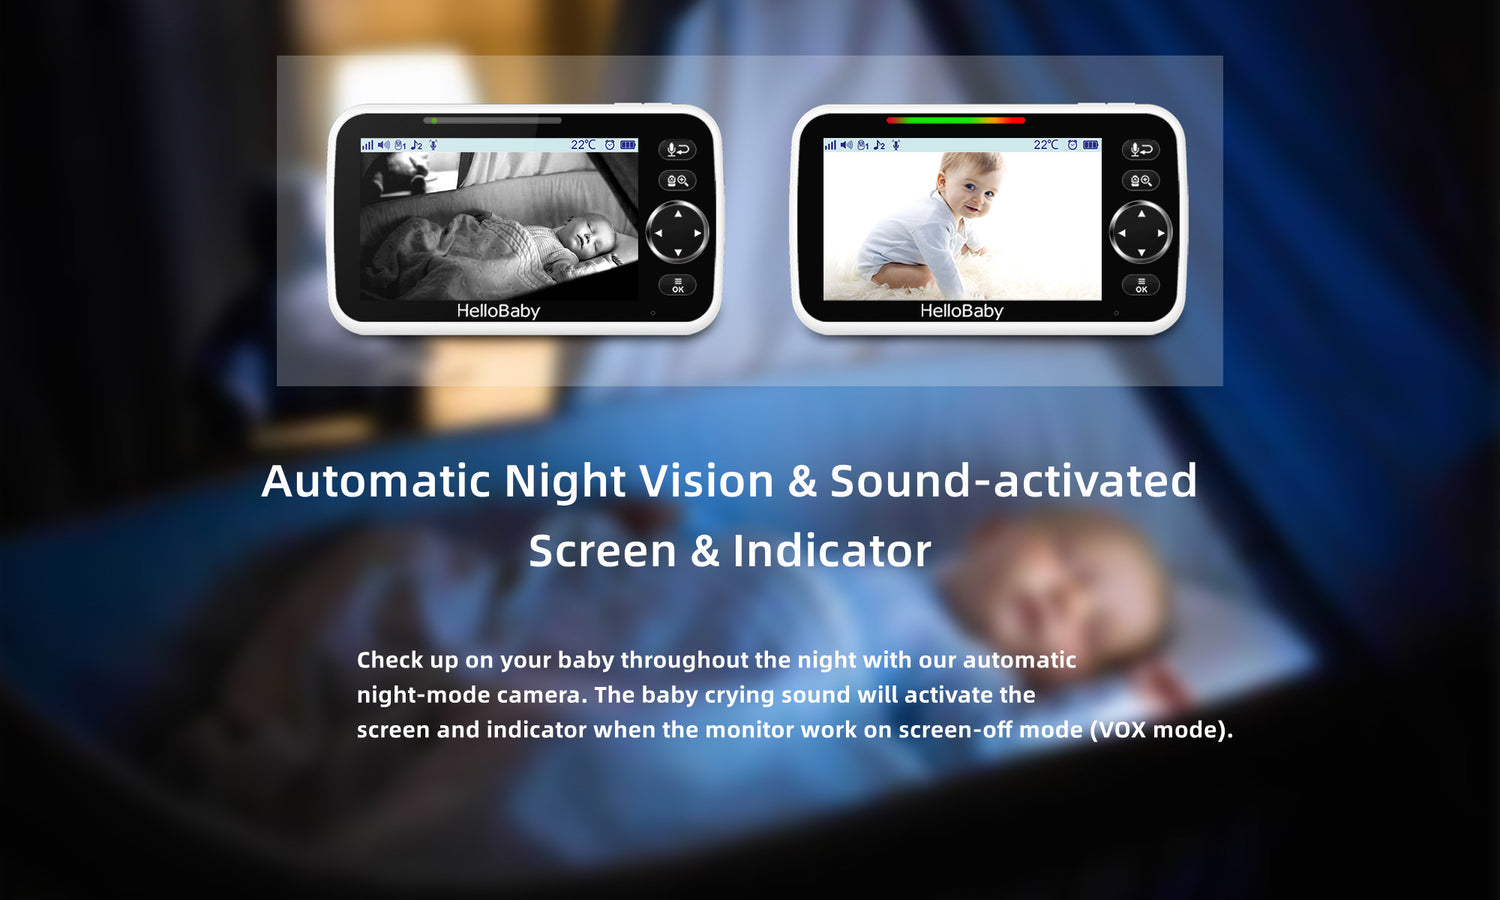 infrared night vision & VOX mode